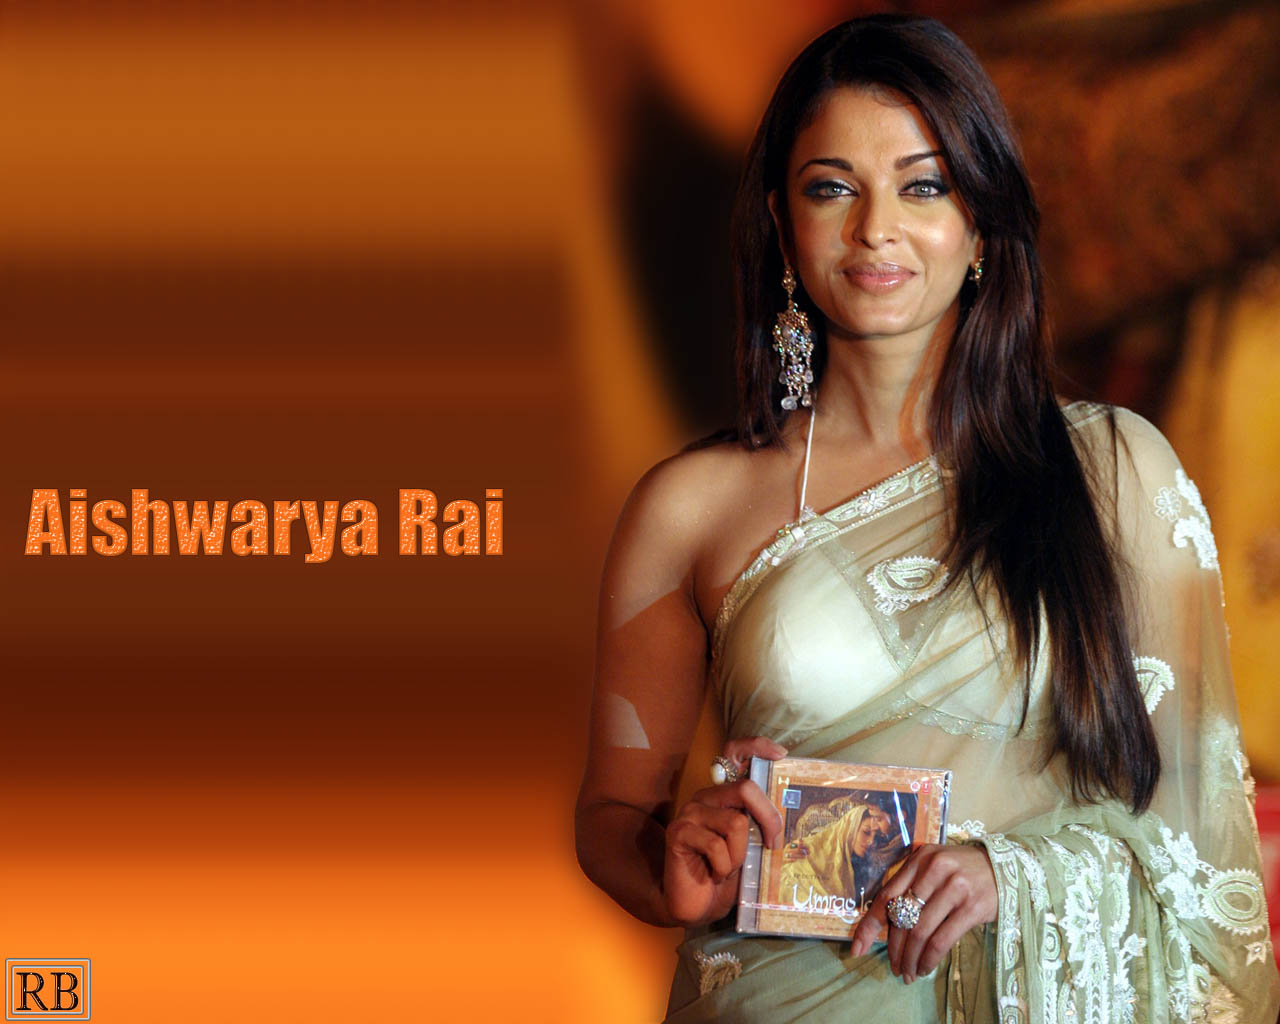 aishwarya rai ke wallpaper,abdomen,sari,trunk